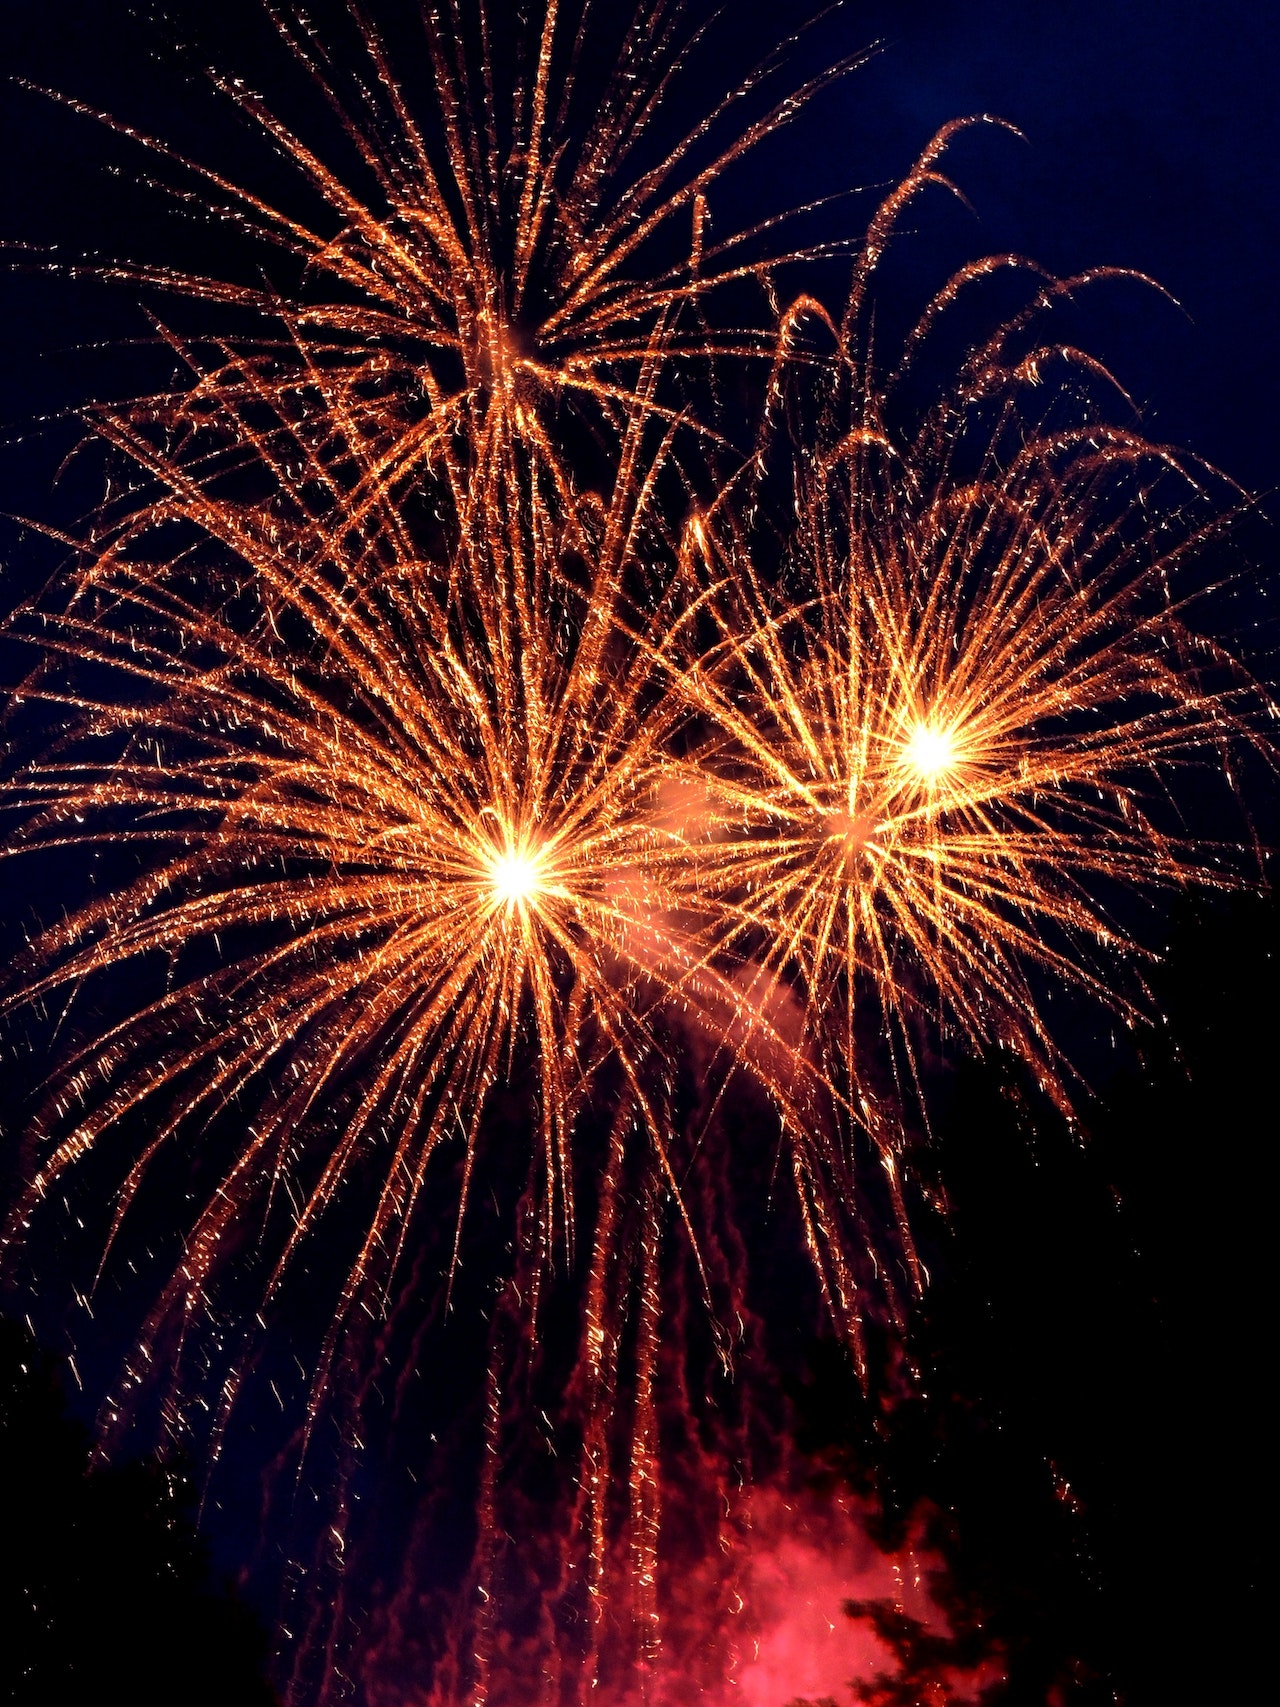 Fireworks In Action In Myrtle Beach